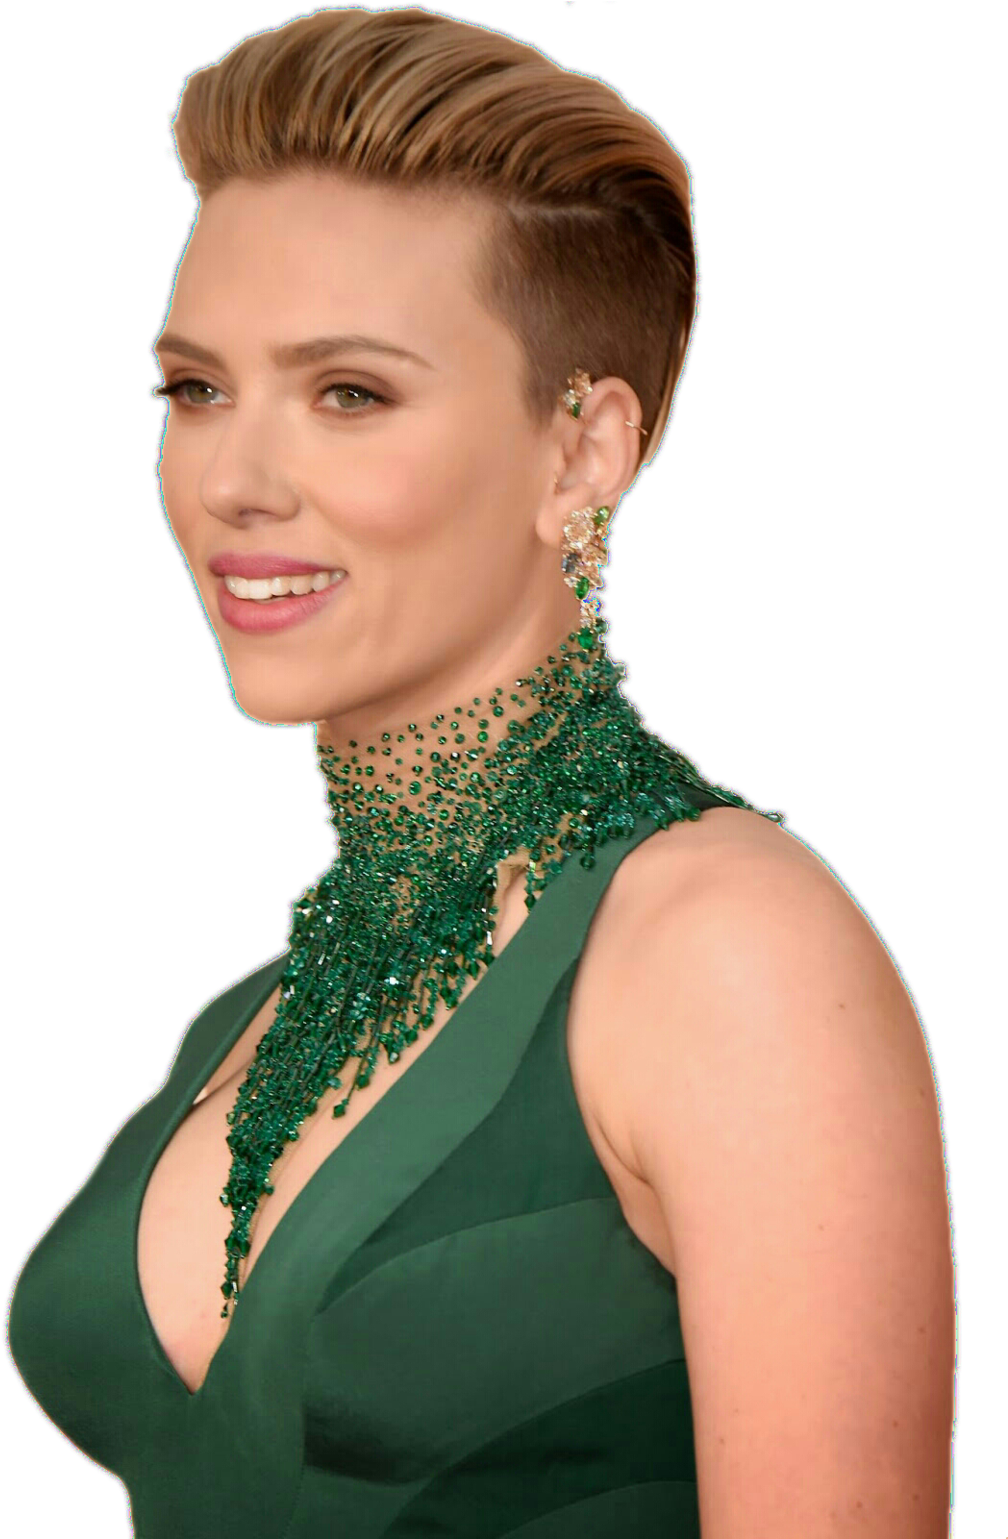 A Woman Wearing A Green Dress